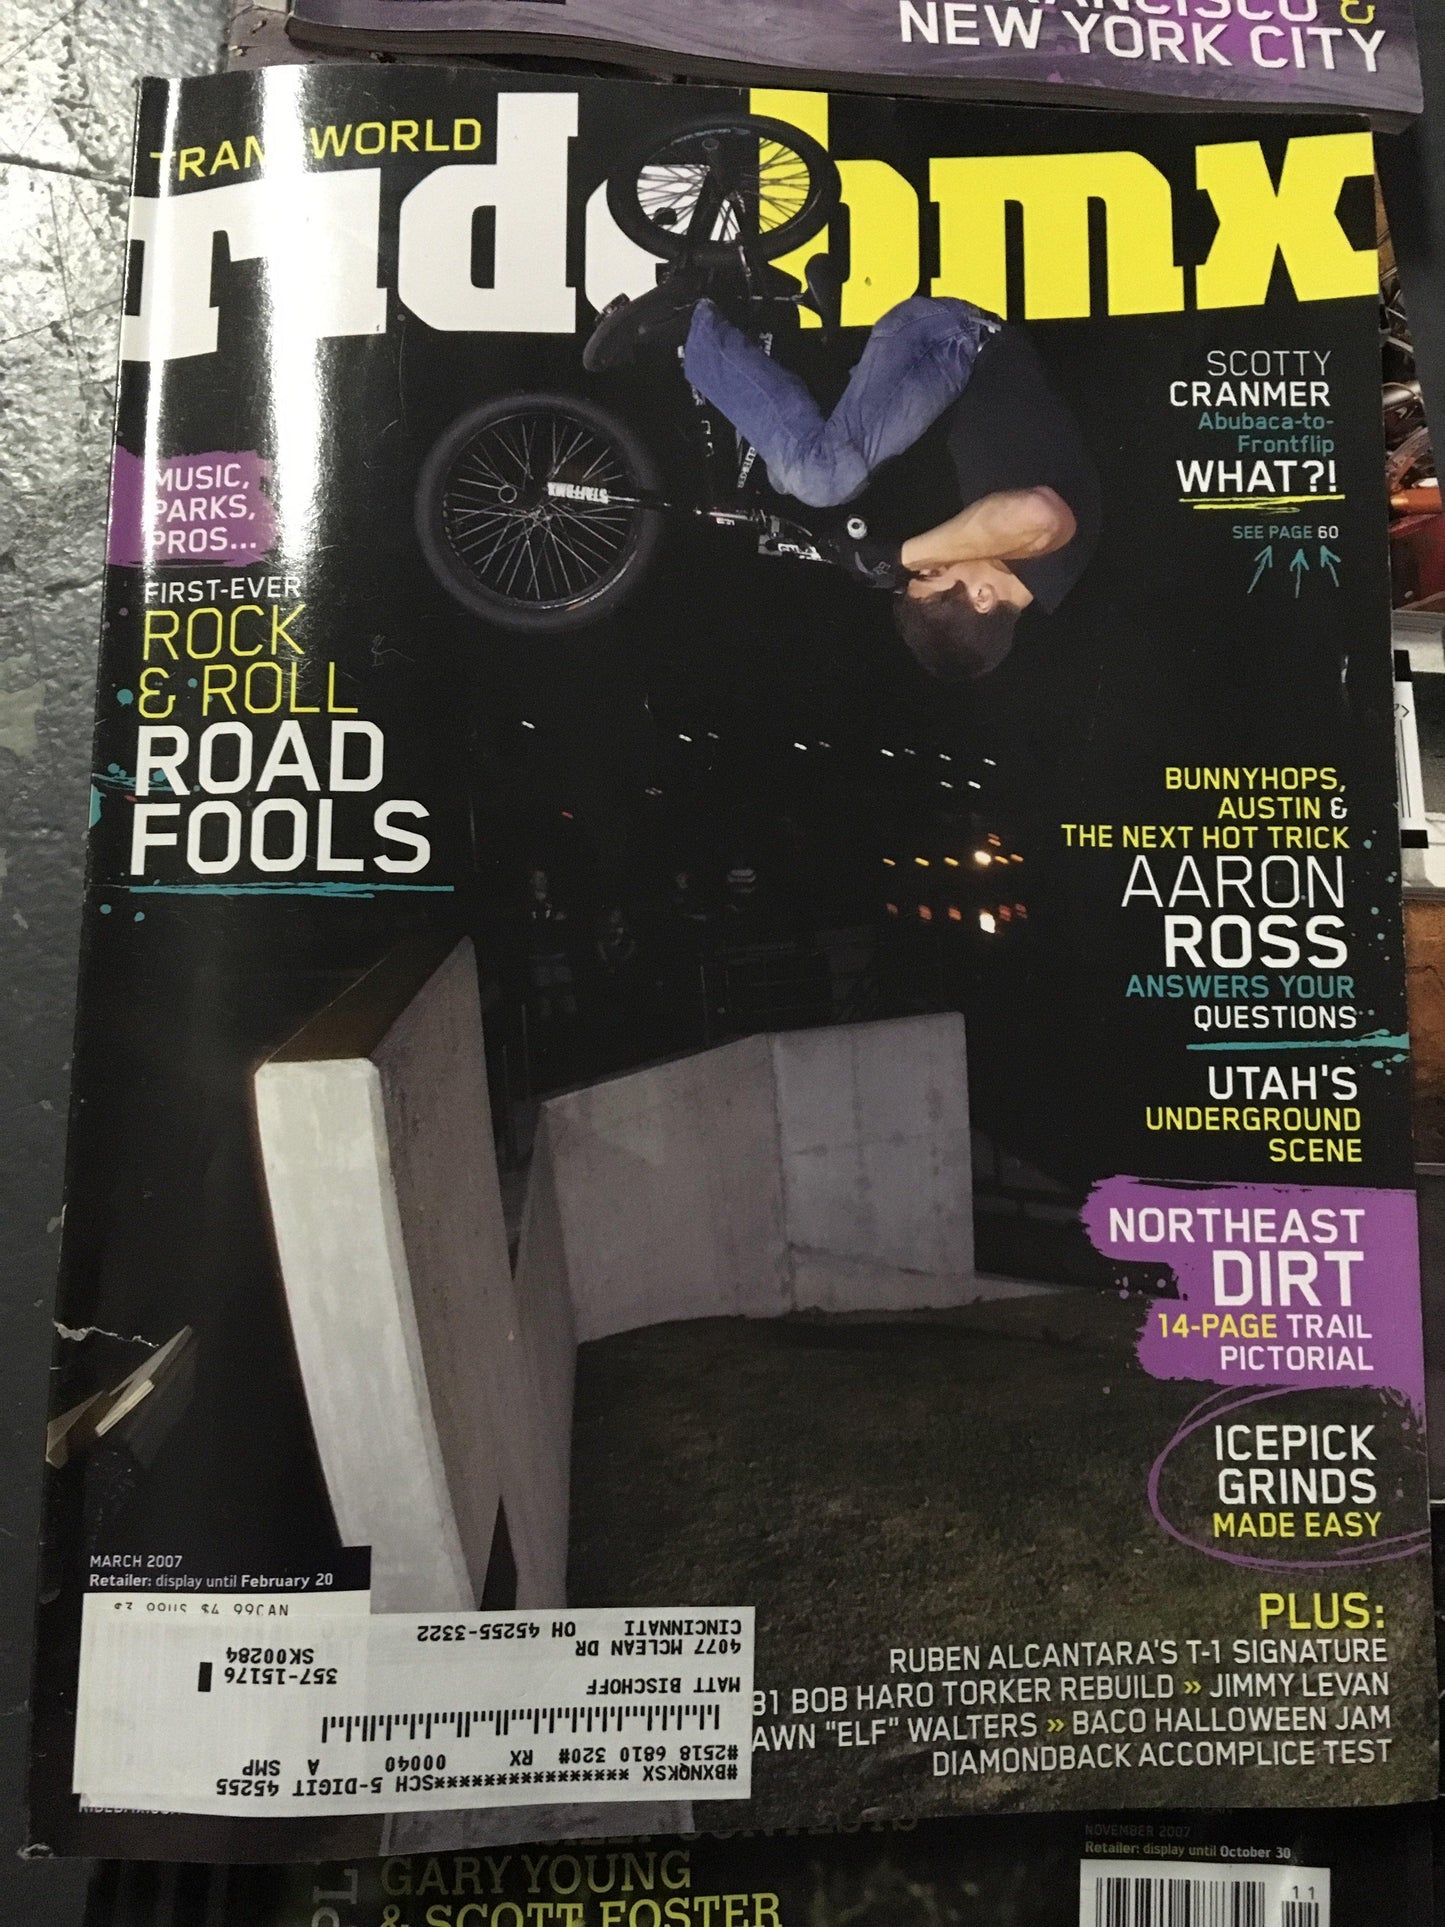 Ride Bmx magazine back issues 2007 - POWERS BMX